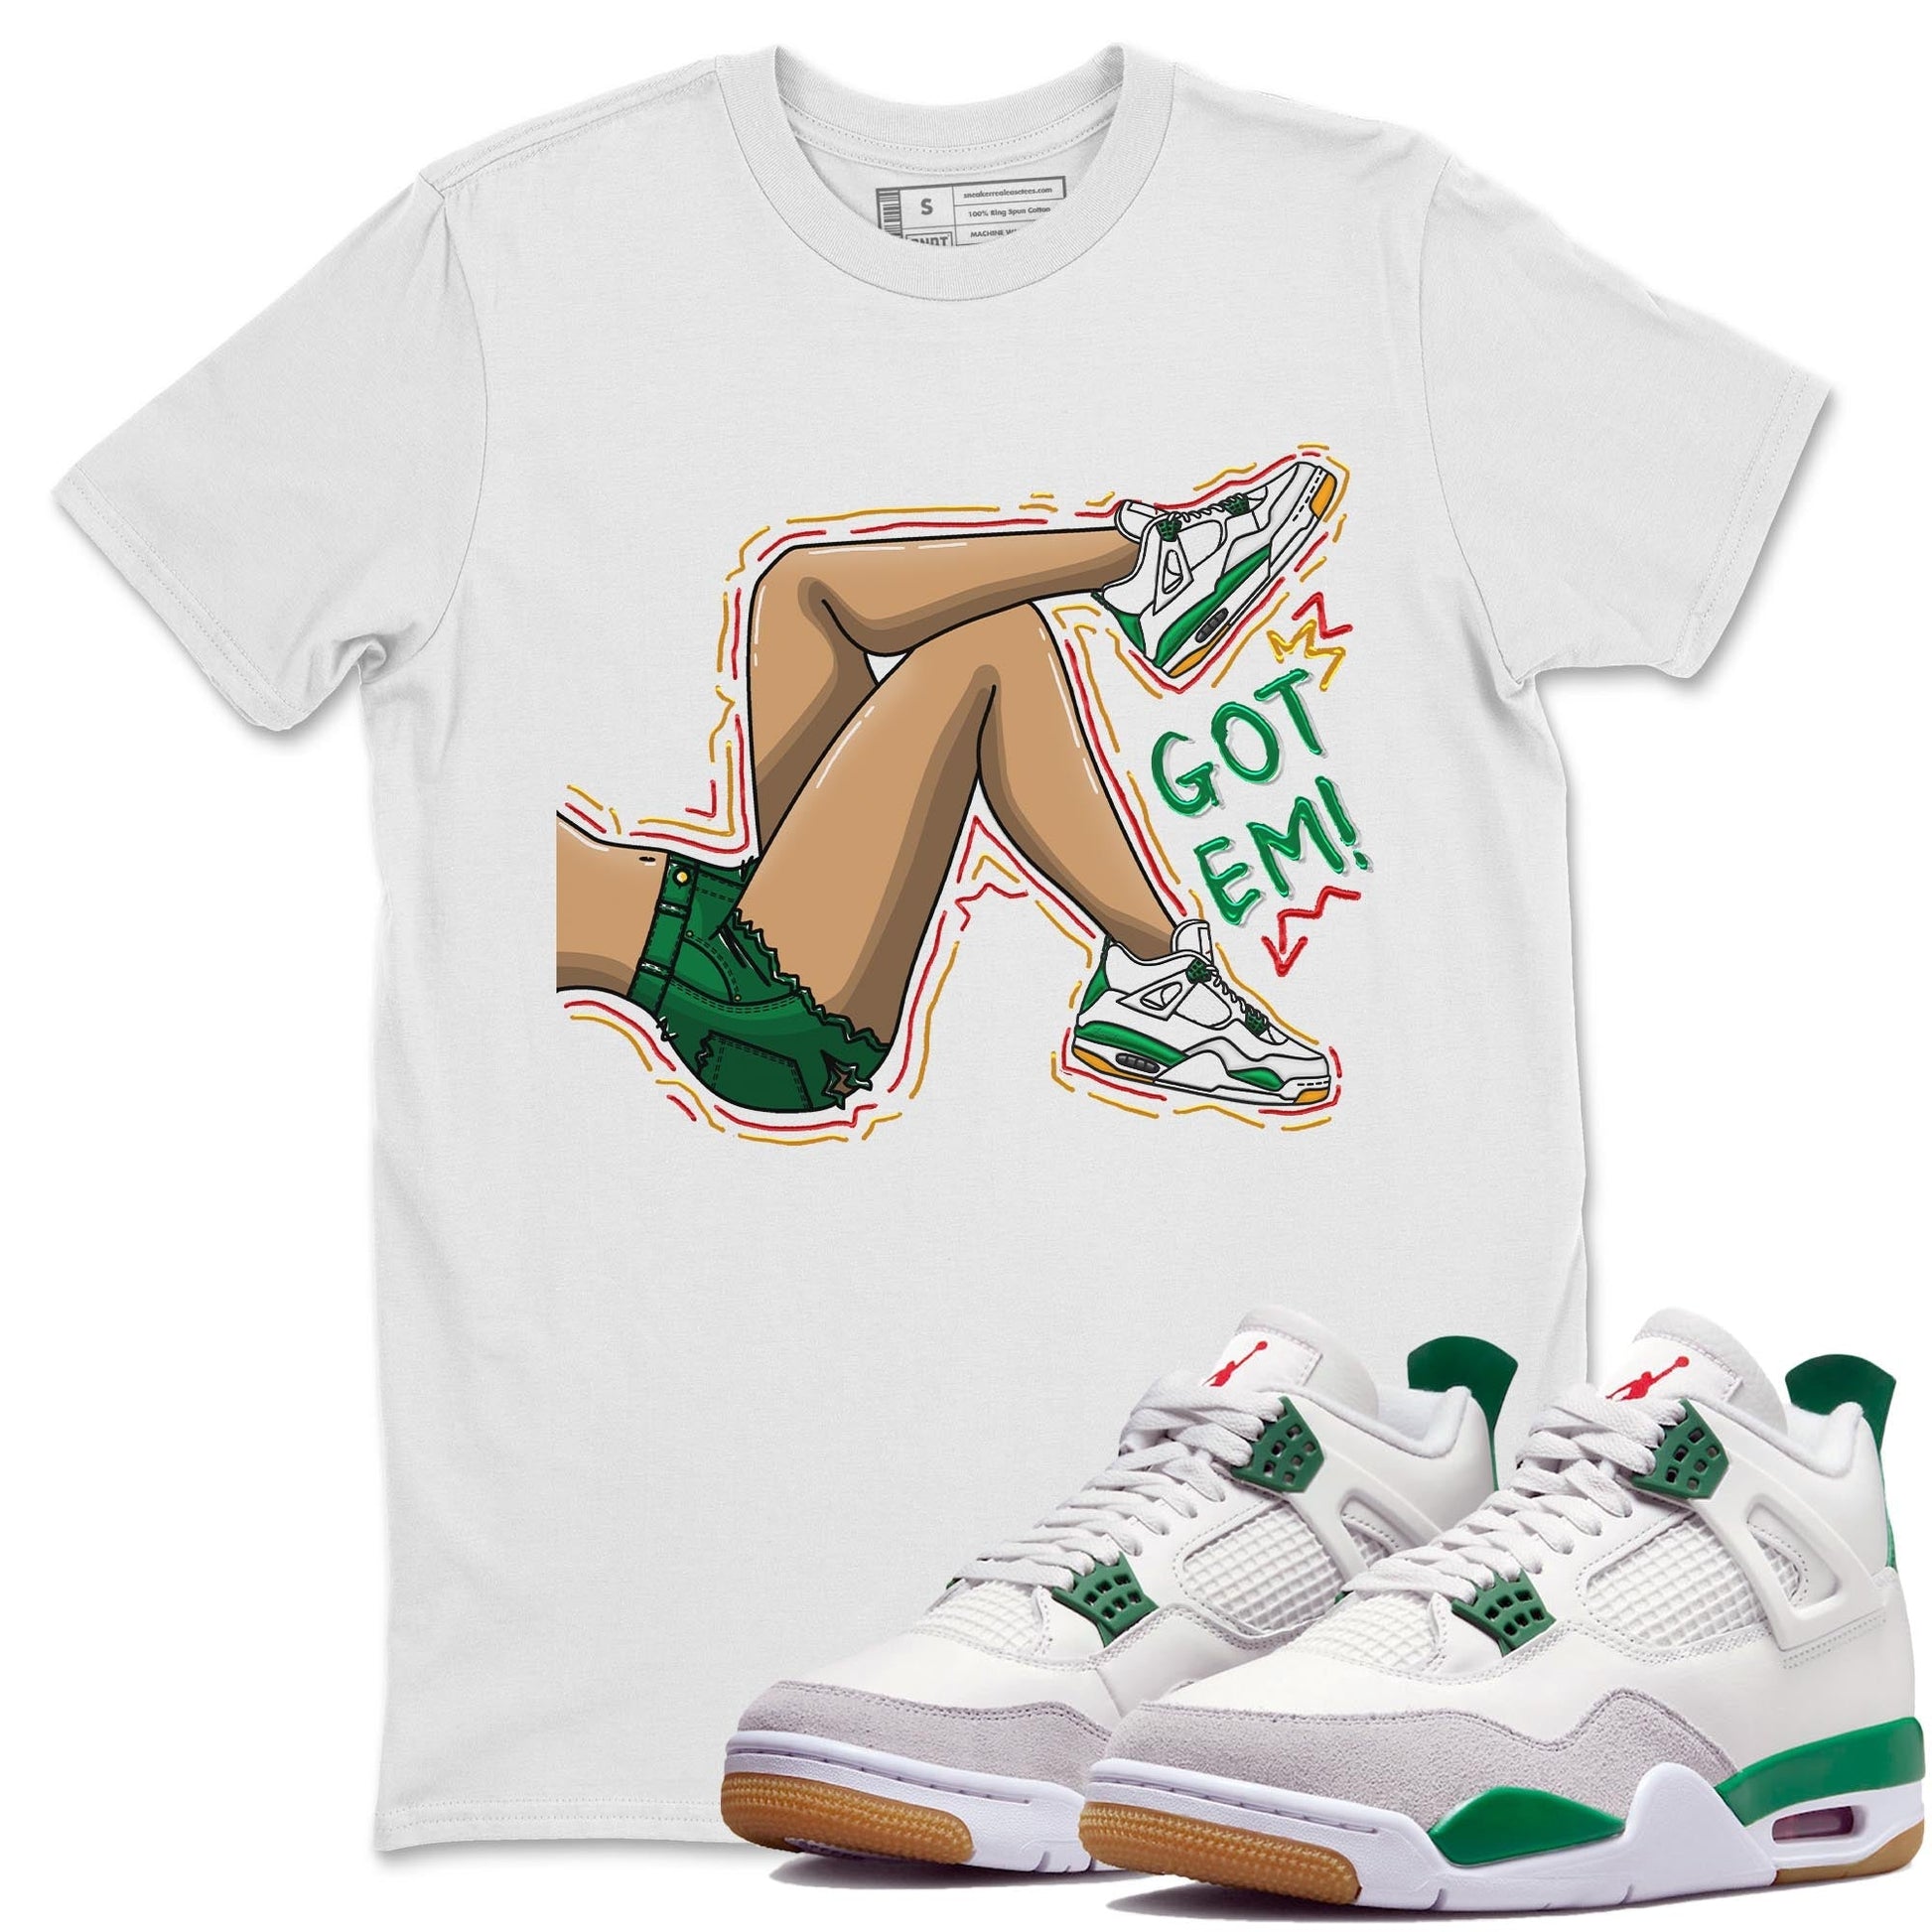 Jordan 4 Pine Green SB Sneaker Match Tees Got Em Legs Sneaker Tees 4s Pine Green Nike SB Sneaker Tees Sneaker Release Shirts Unisex Shirts White 1